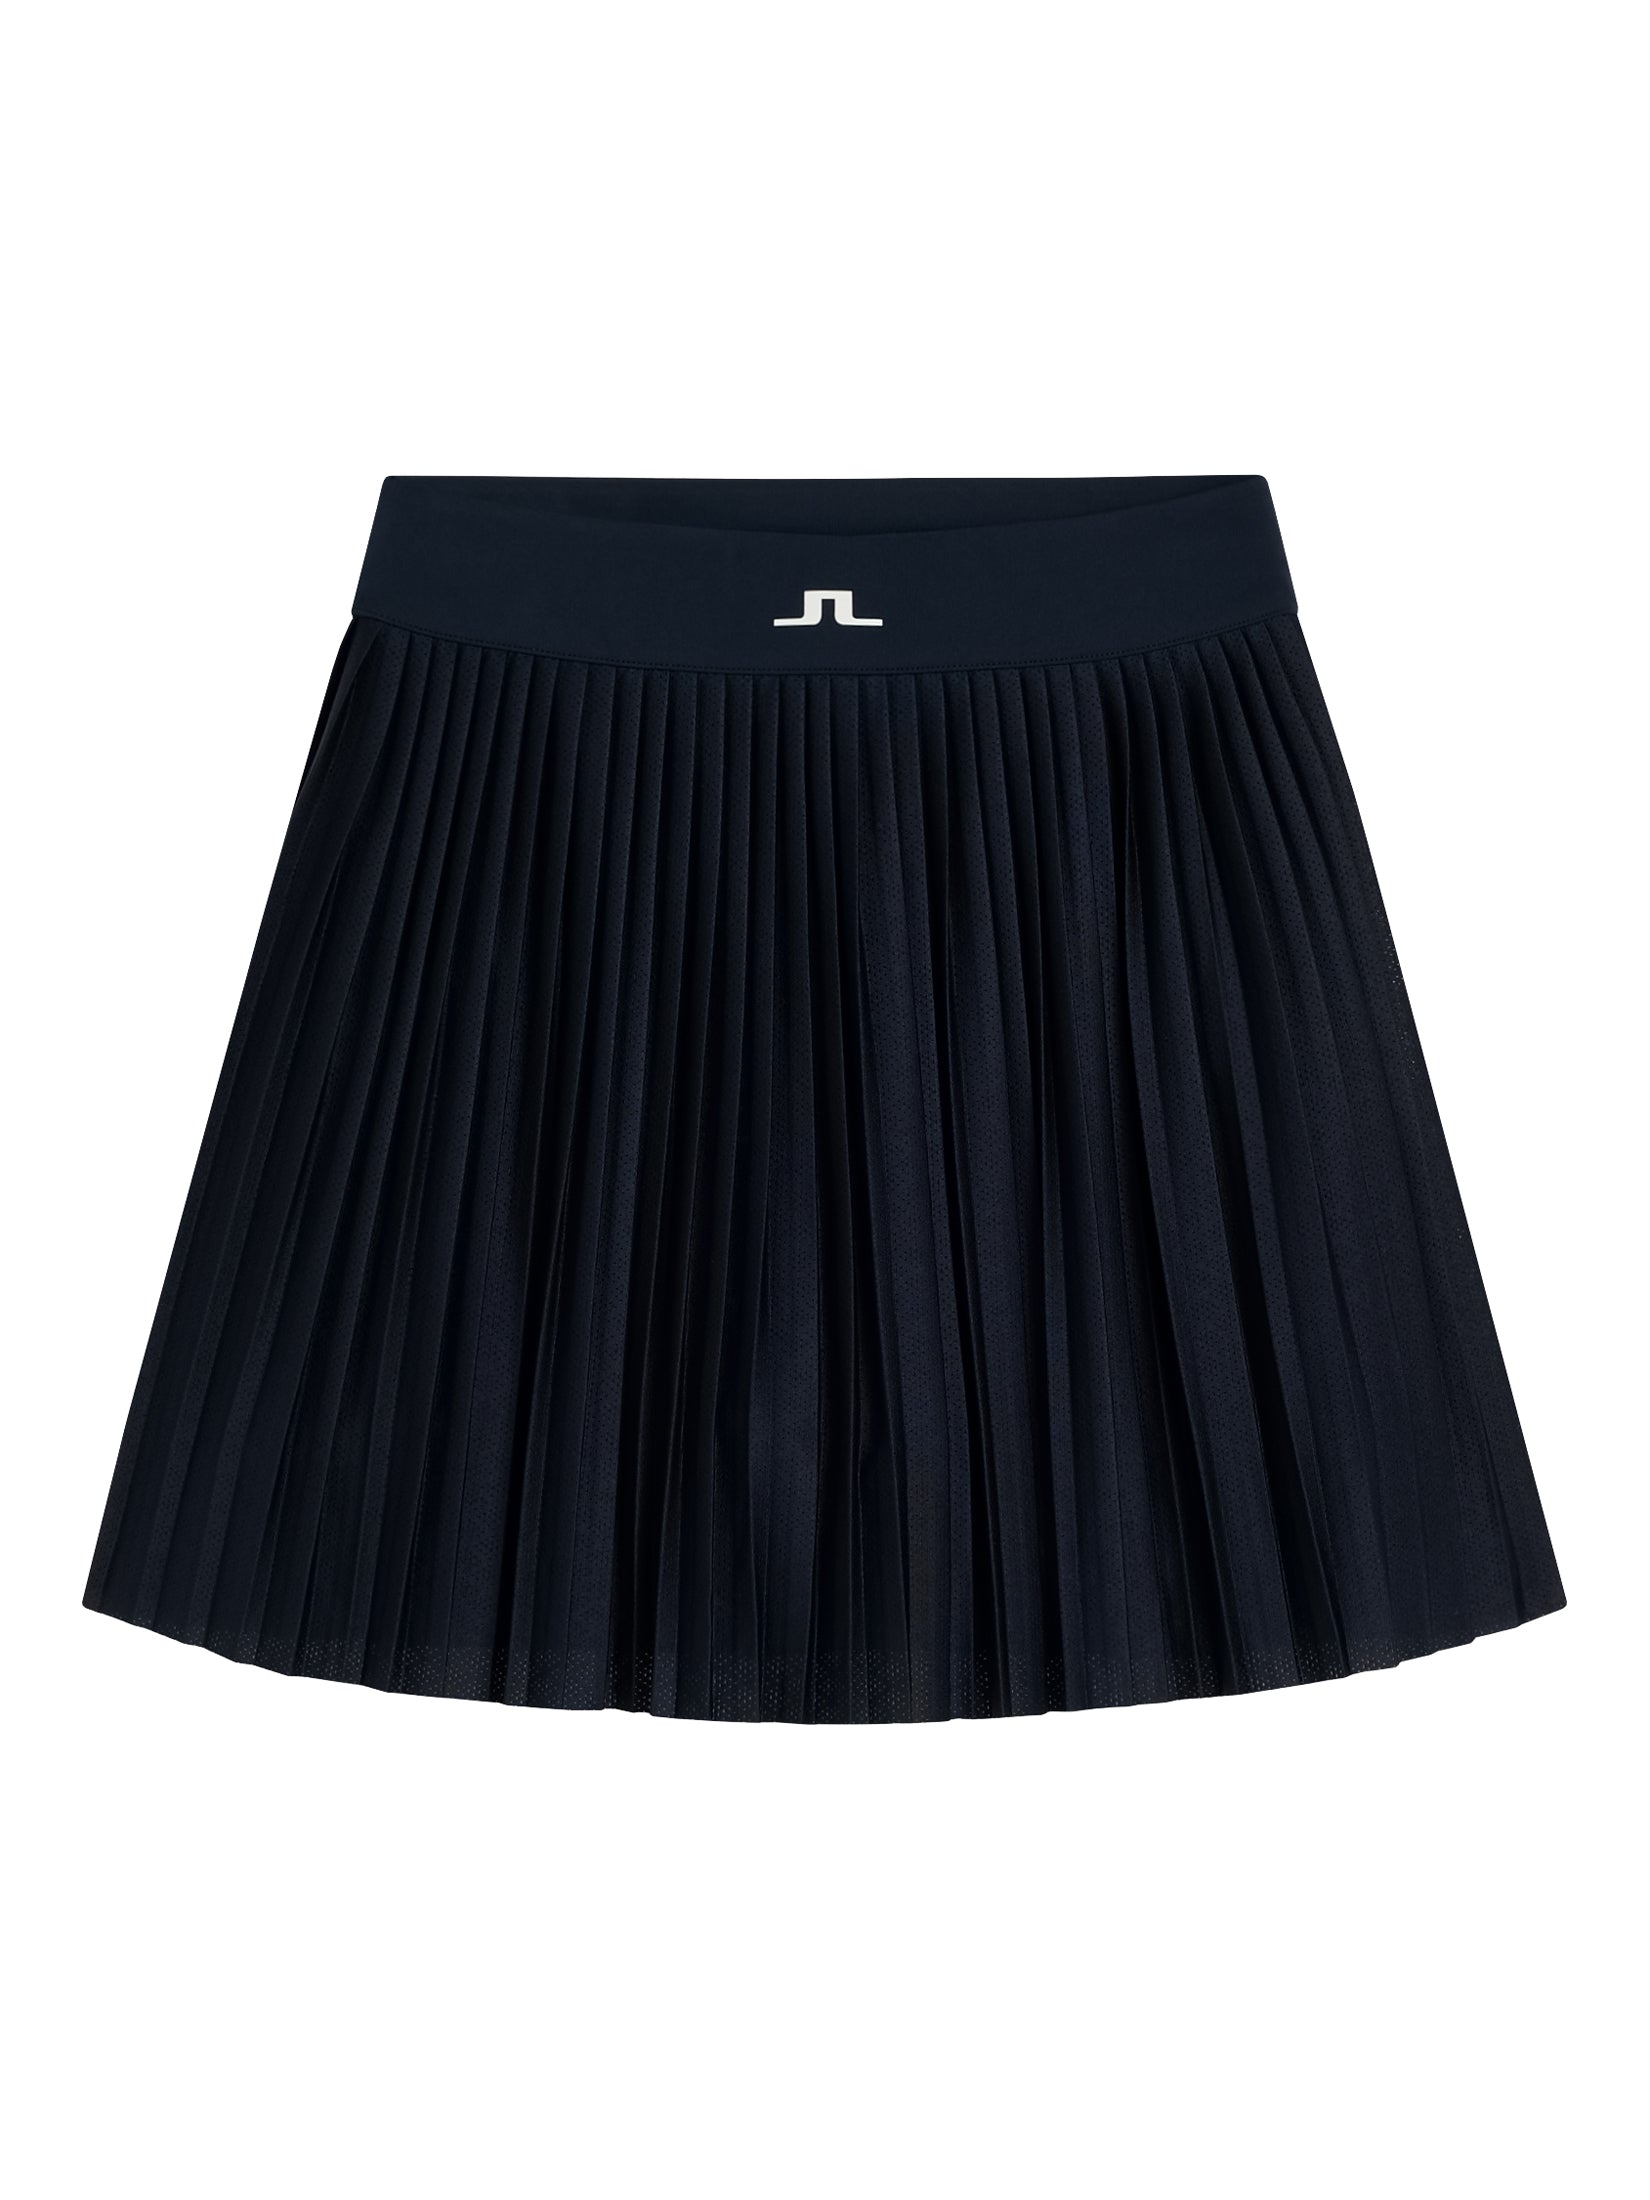 Binx Skirt / JL Navy – J.Lindeberg